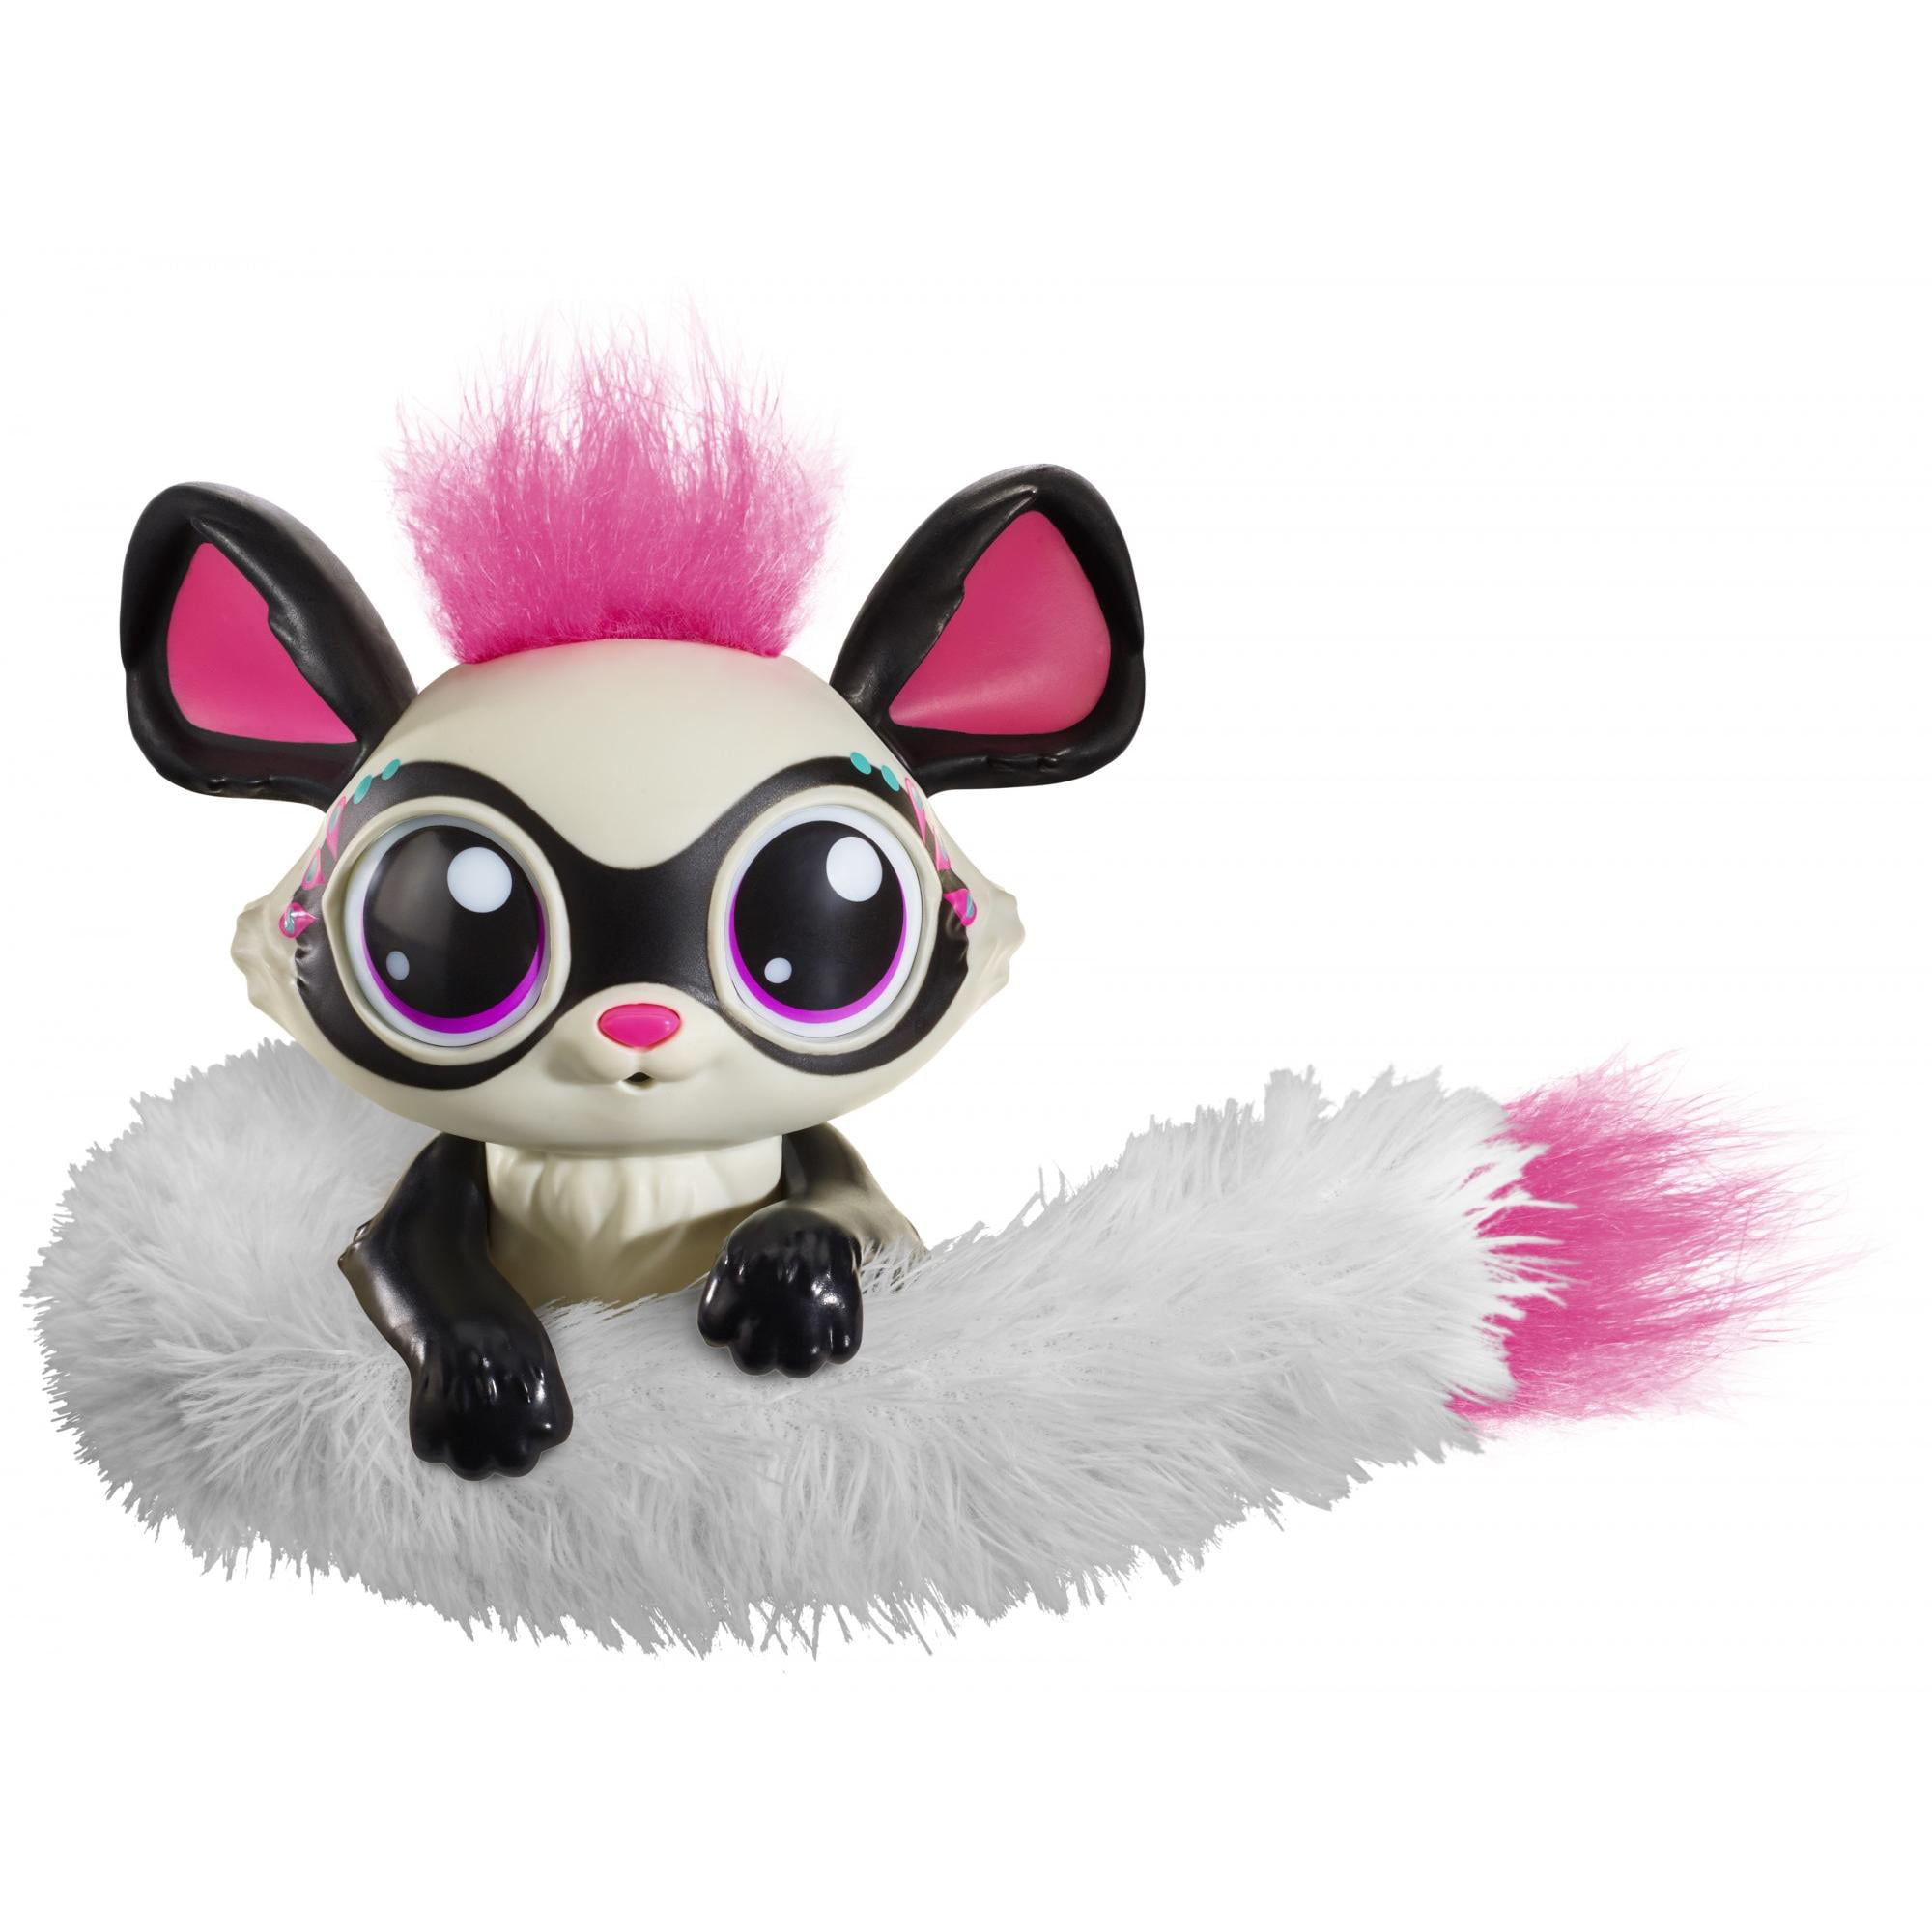 Lil' Gleemerz Glowzer Furry Friend Lights Up Interactive Talking Toy Girls 5+ 